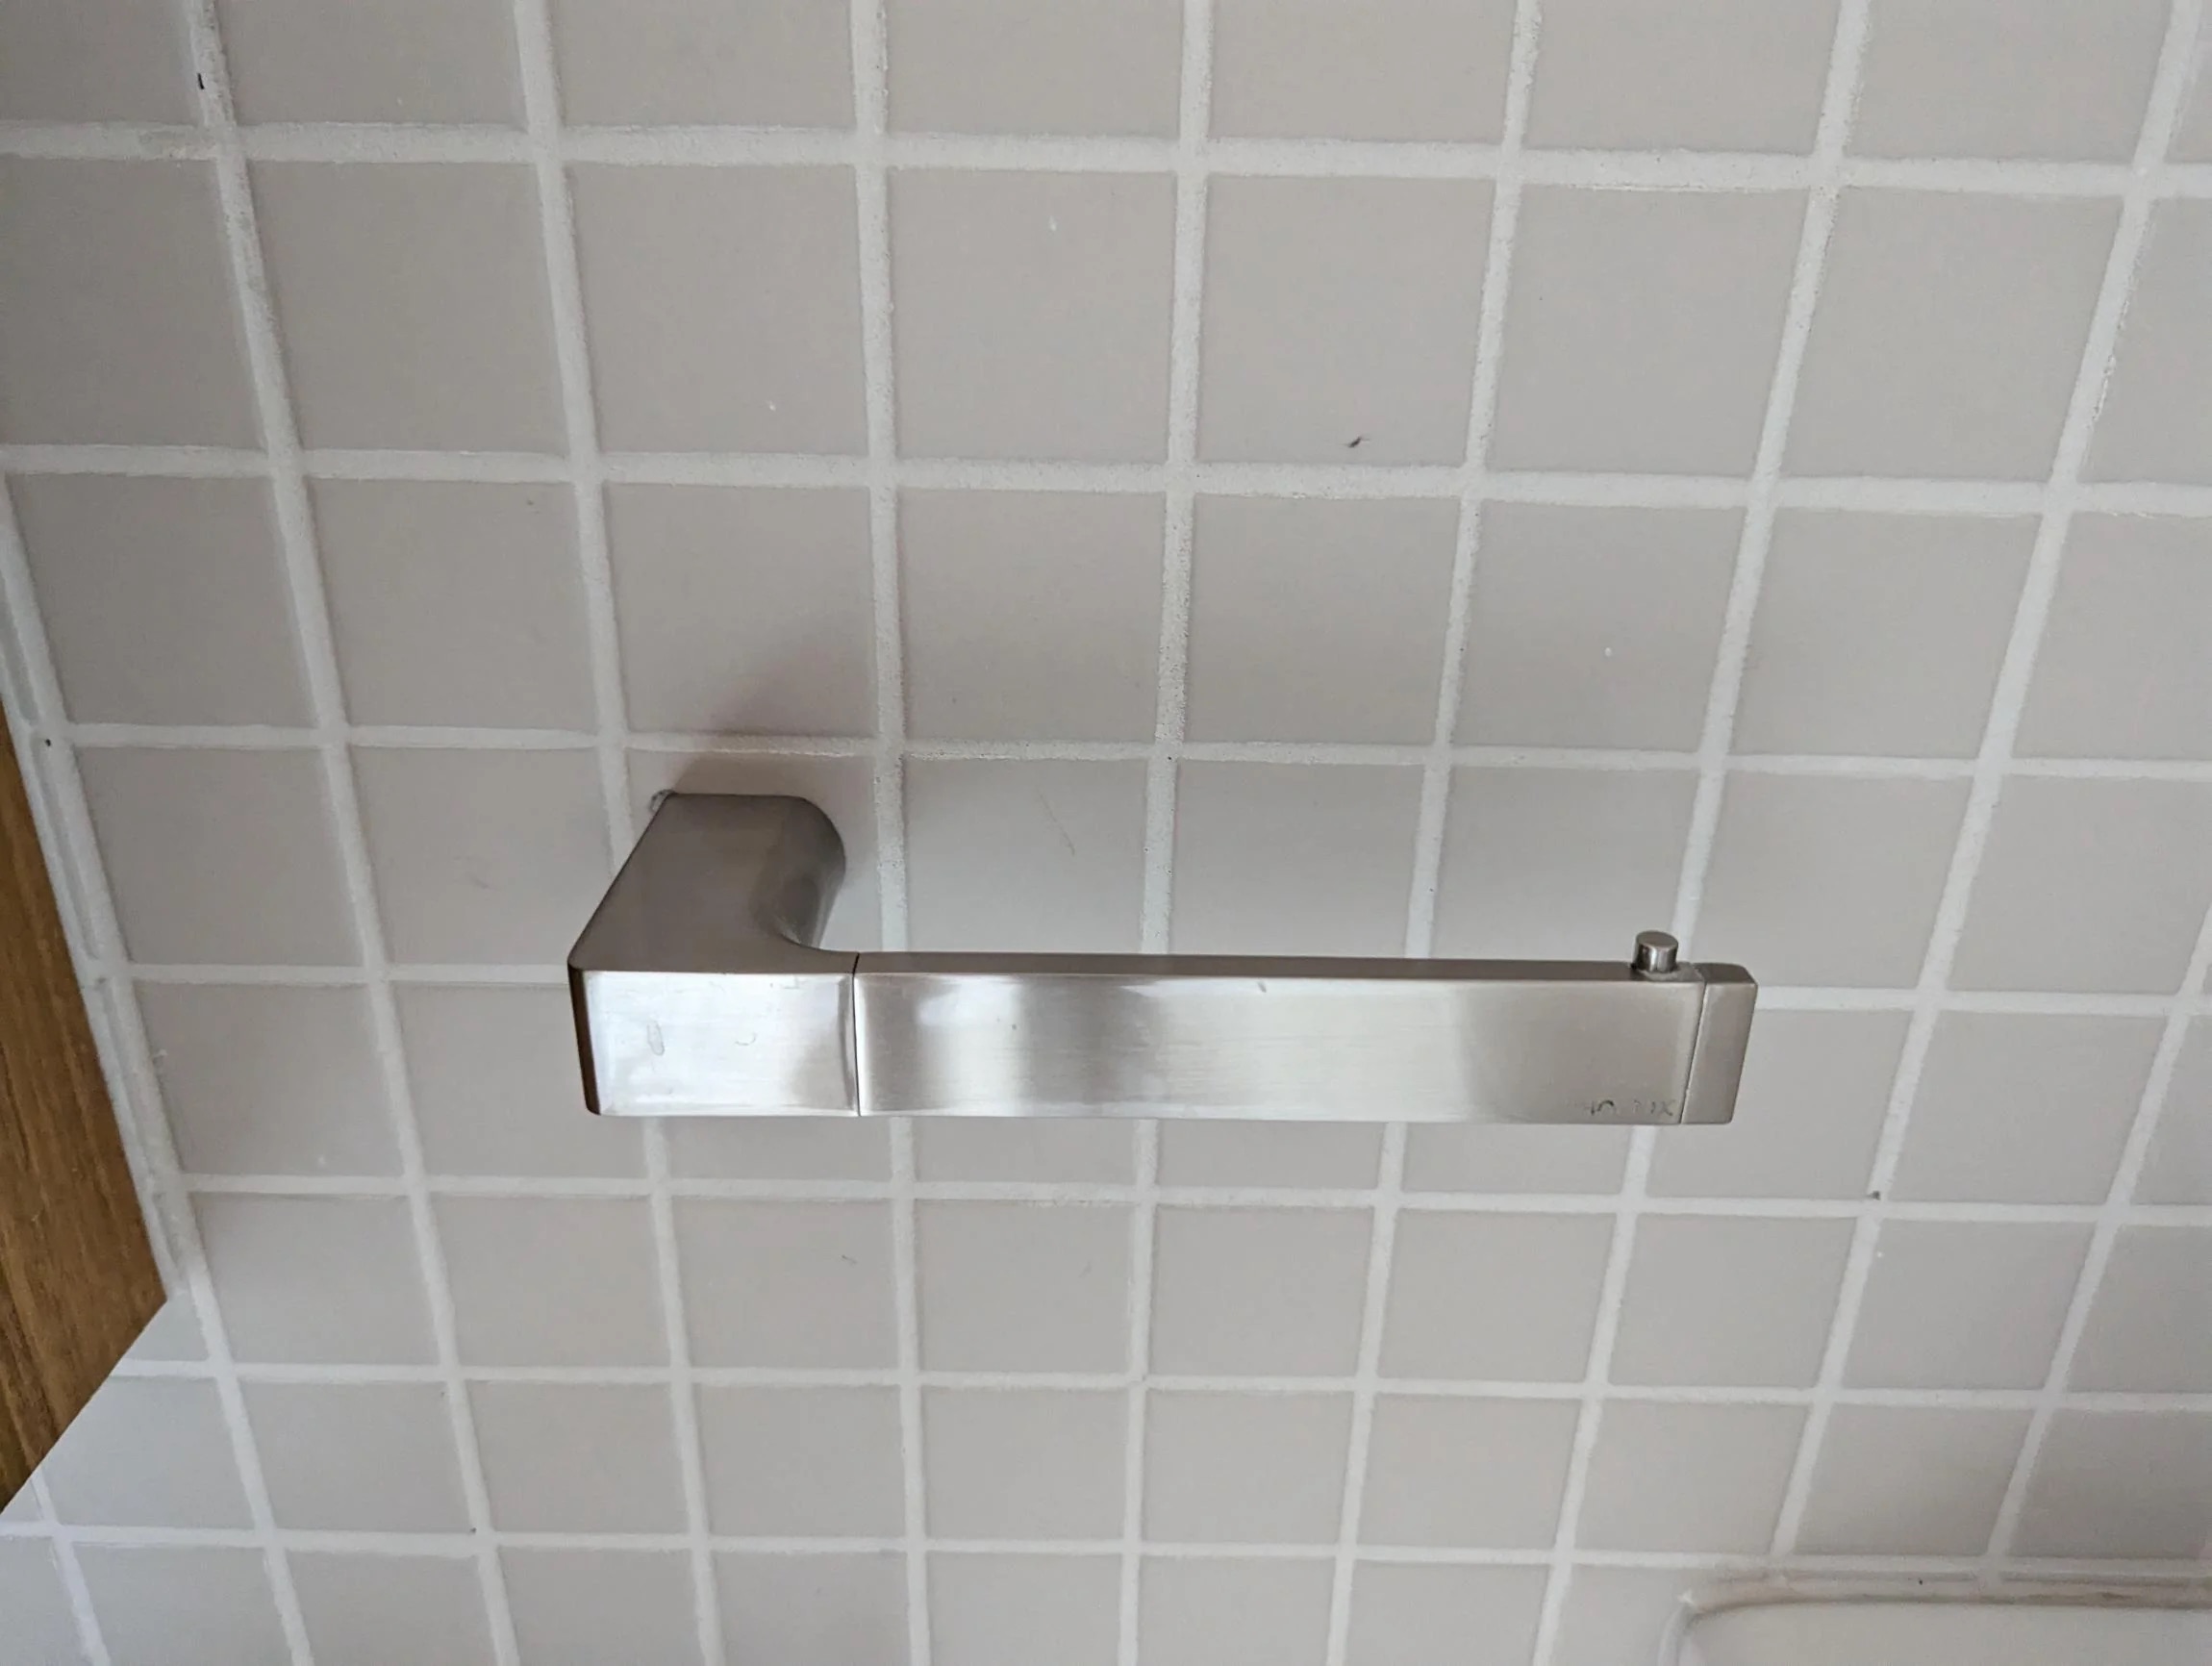 Screw-In Wall Mount Toilet Paper Holder